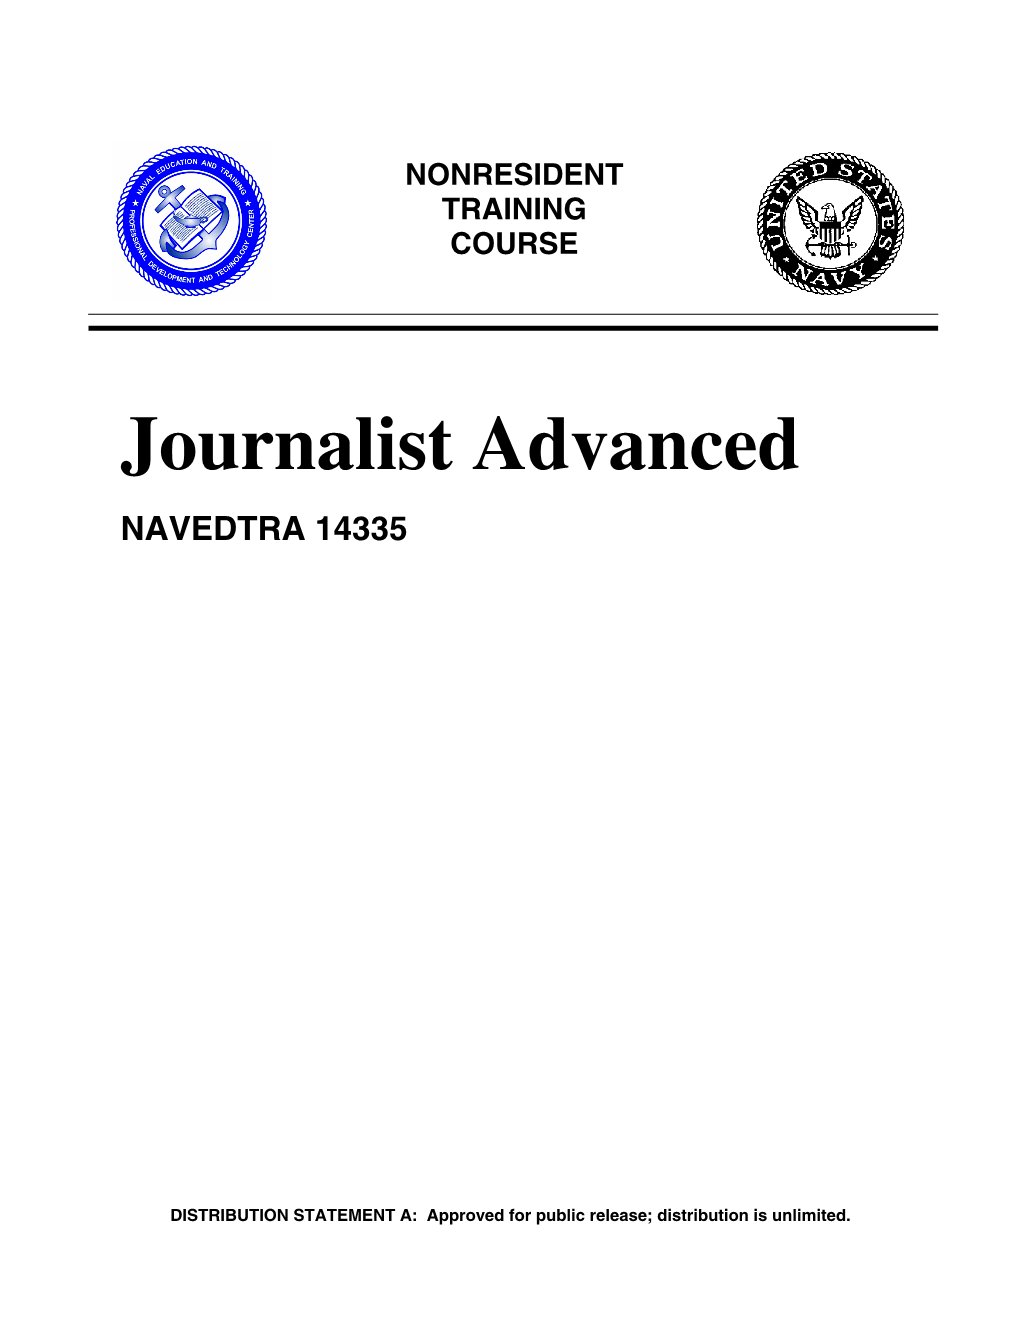 NAVEDTRA 14335 Journalist Advanced